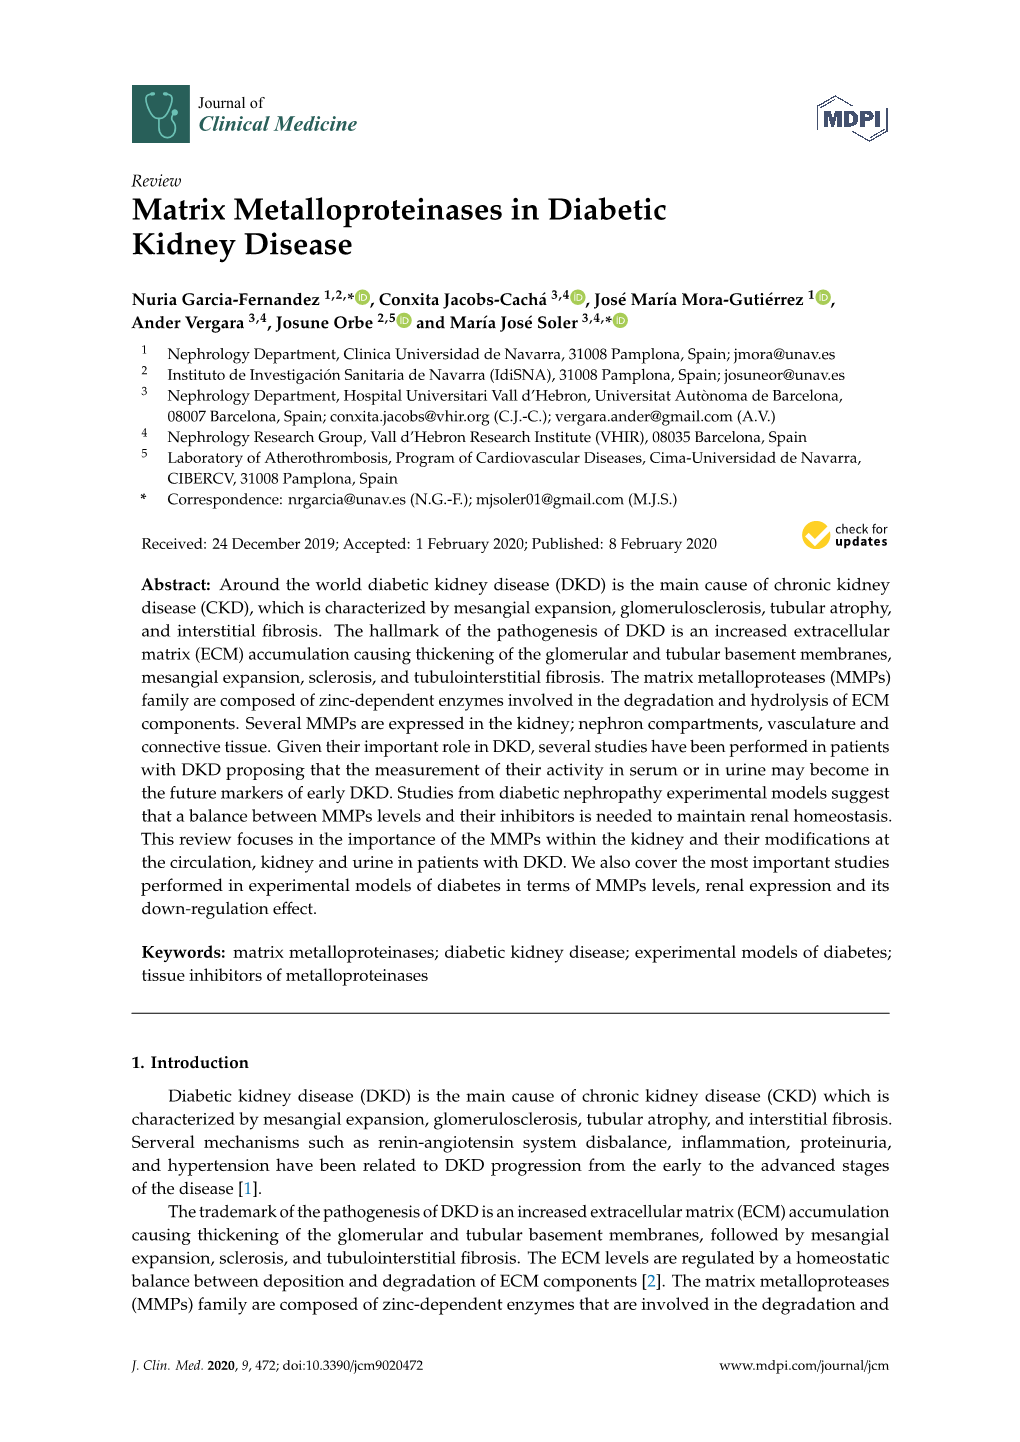 Matrix Metalloproteinases in Diabetic Kidney Disease